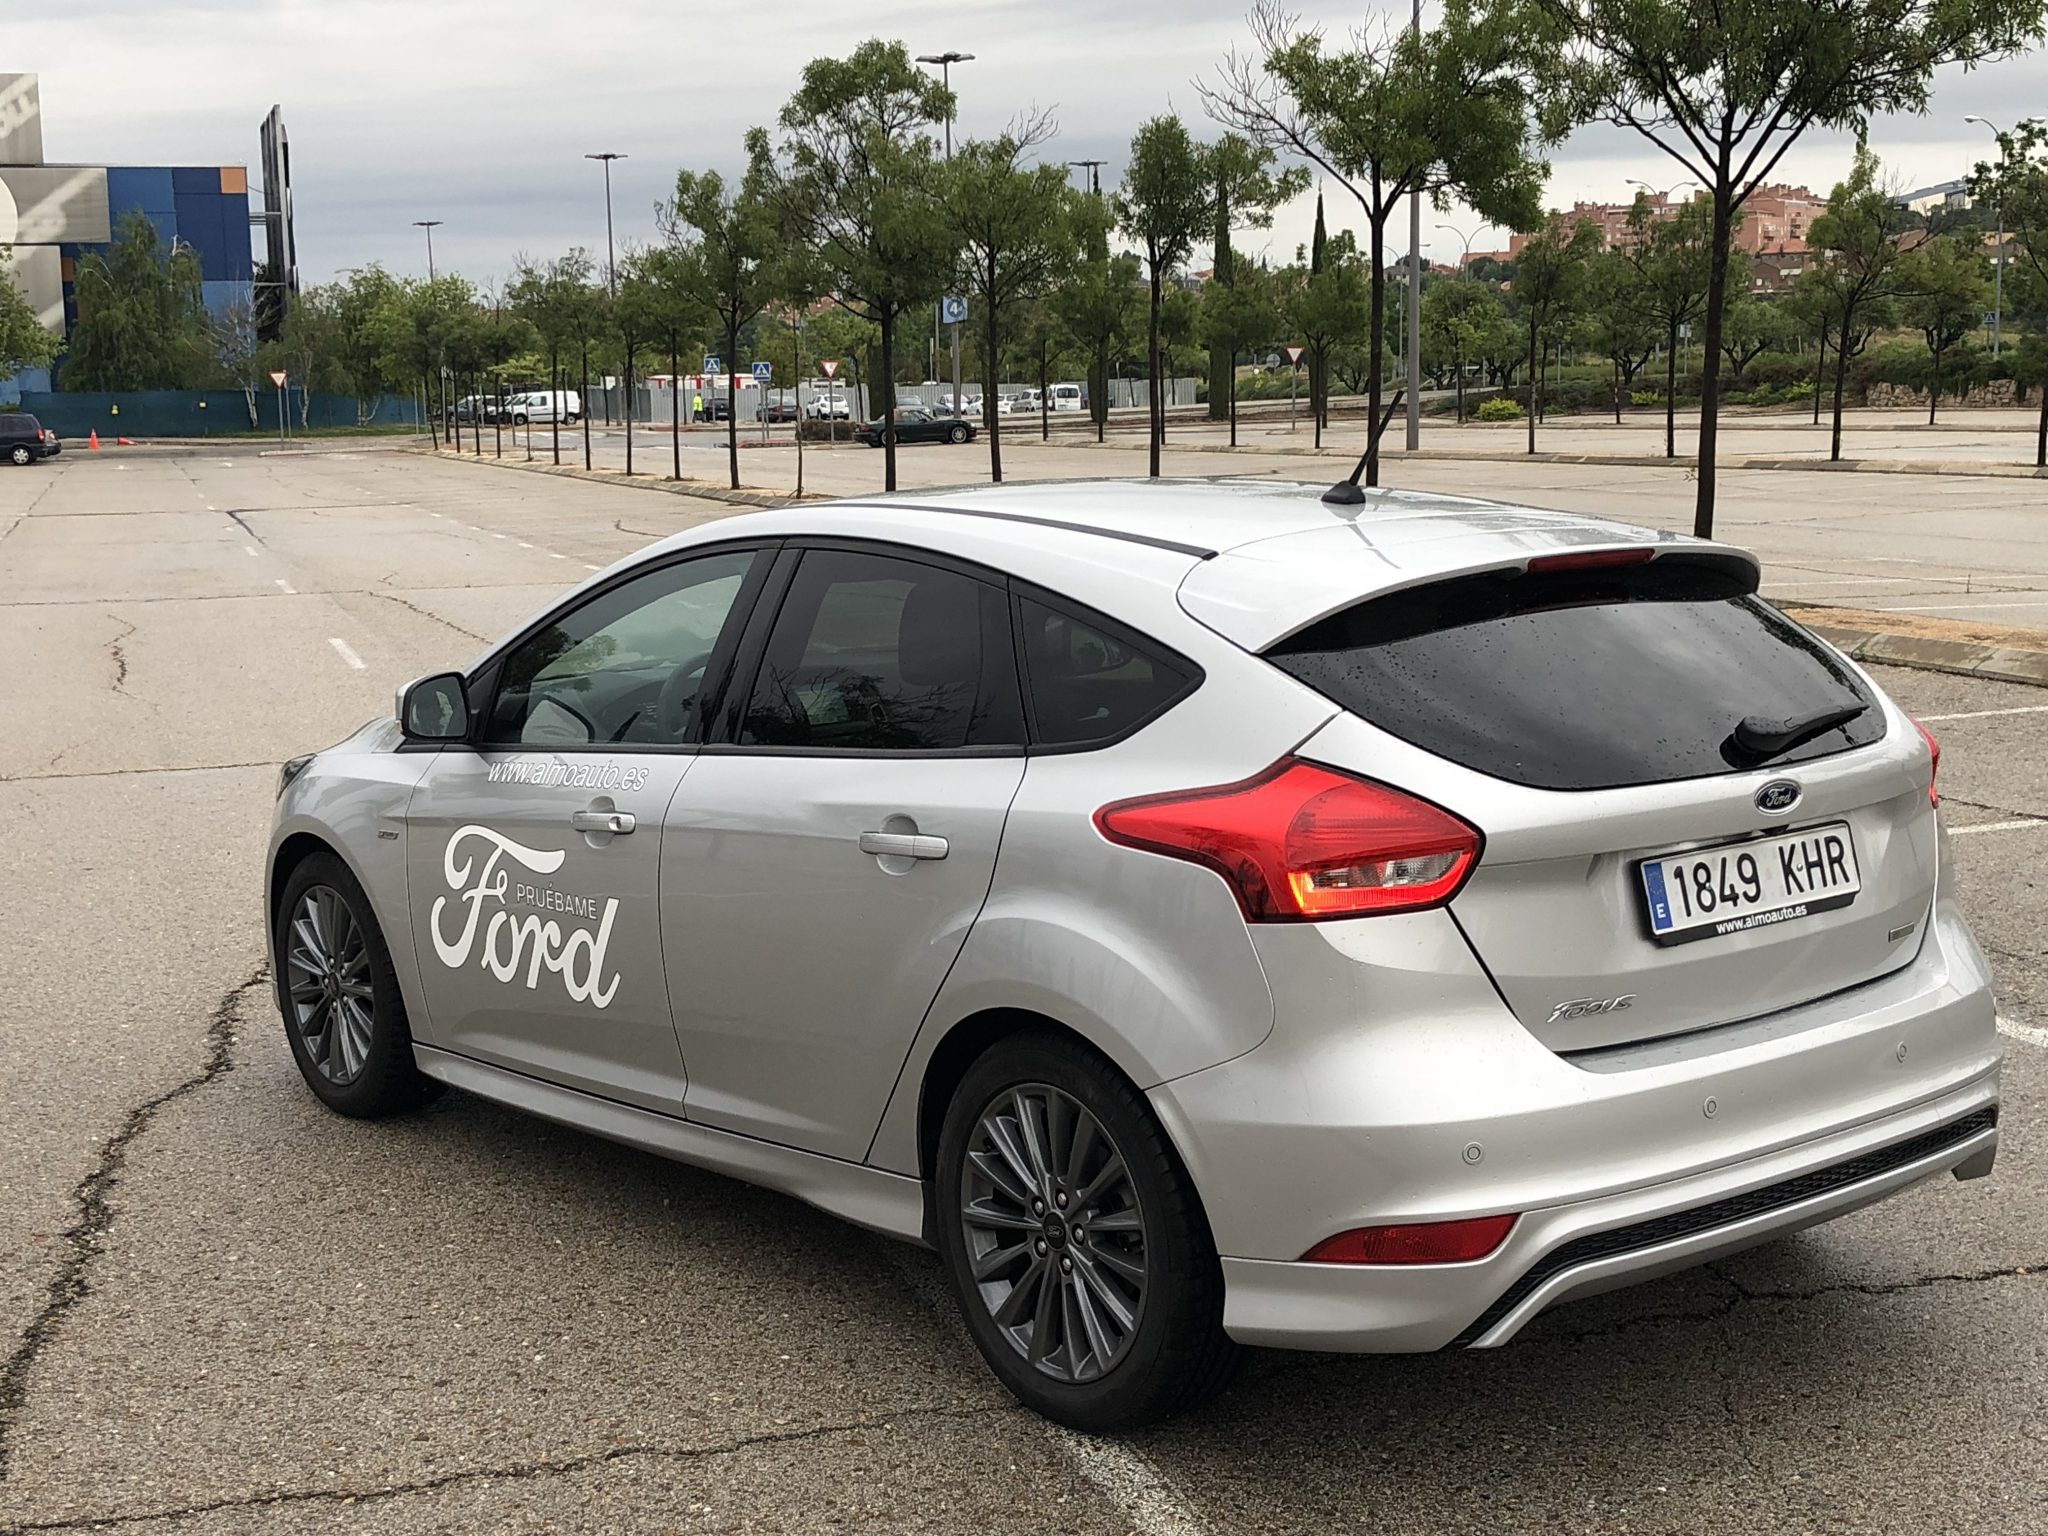 20180608 055930700 iOS - Ford focus ST-Line 1.0 Ecoboost 125 CV